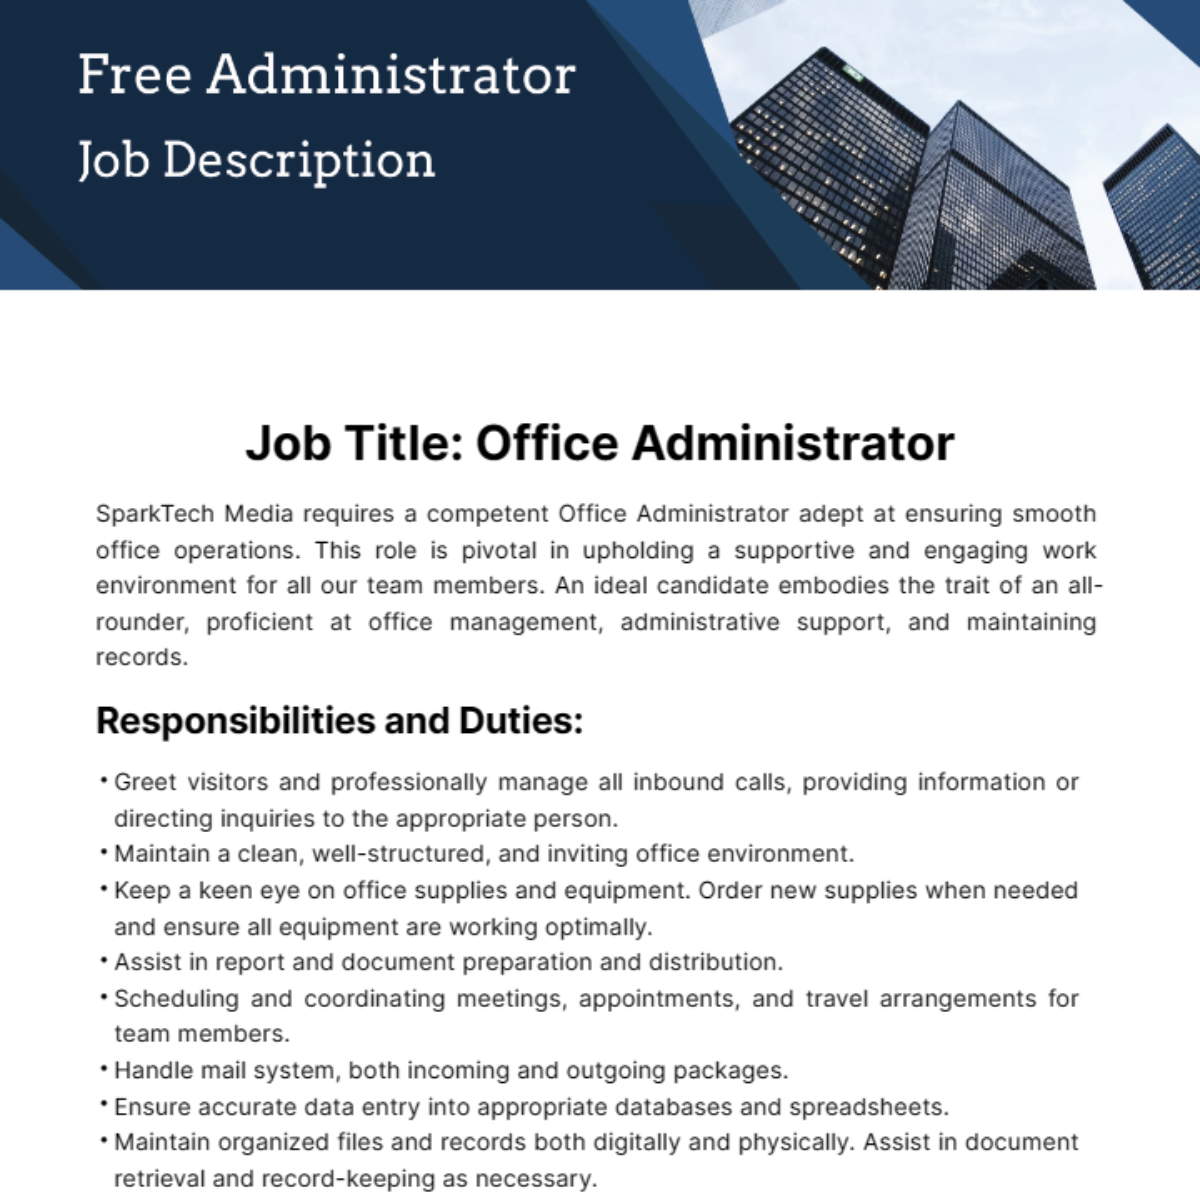 Free Administrative Job Description Template